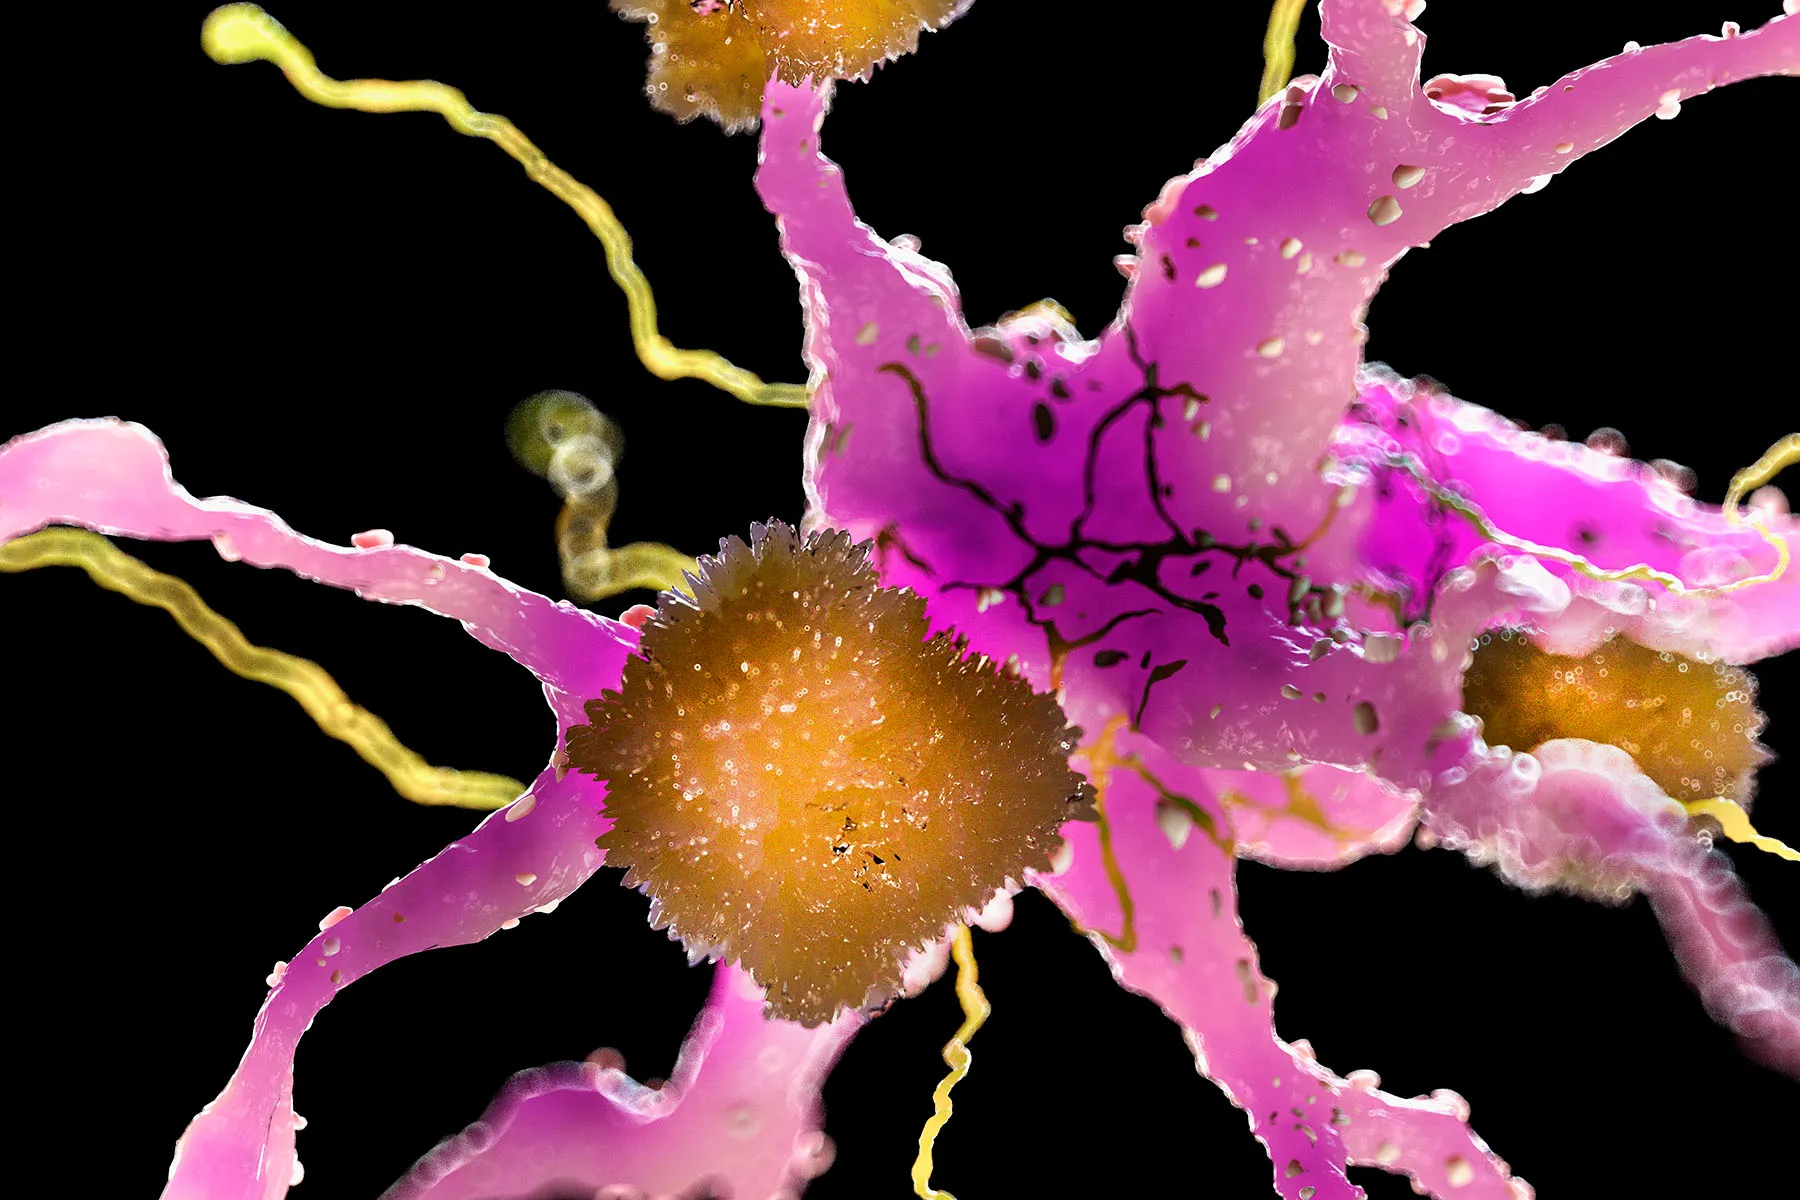 FDA Approves New Drug to Slow Alzheimer’s Disease